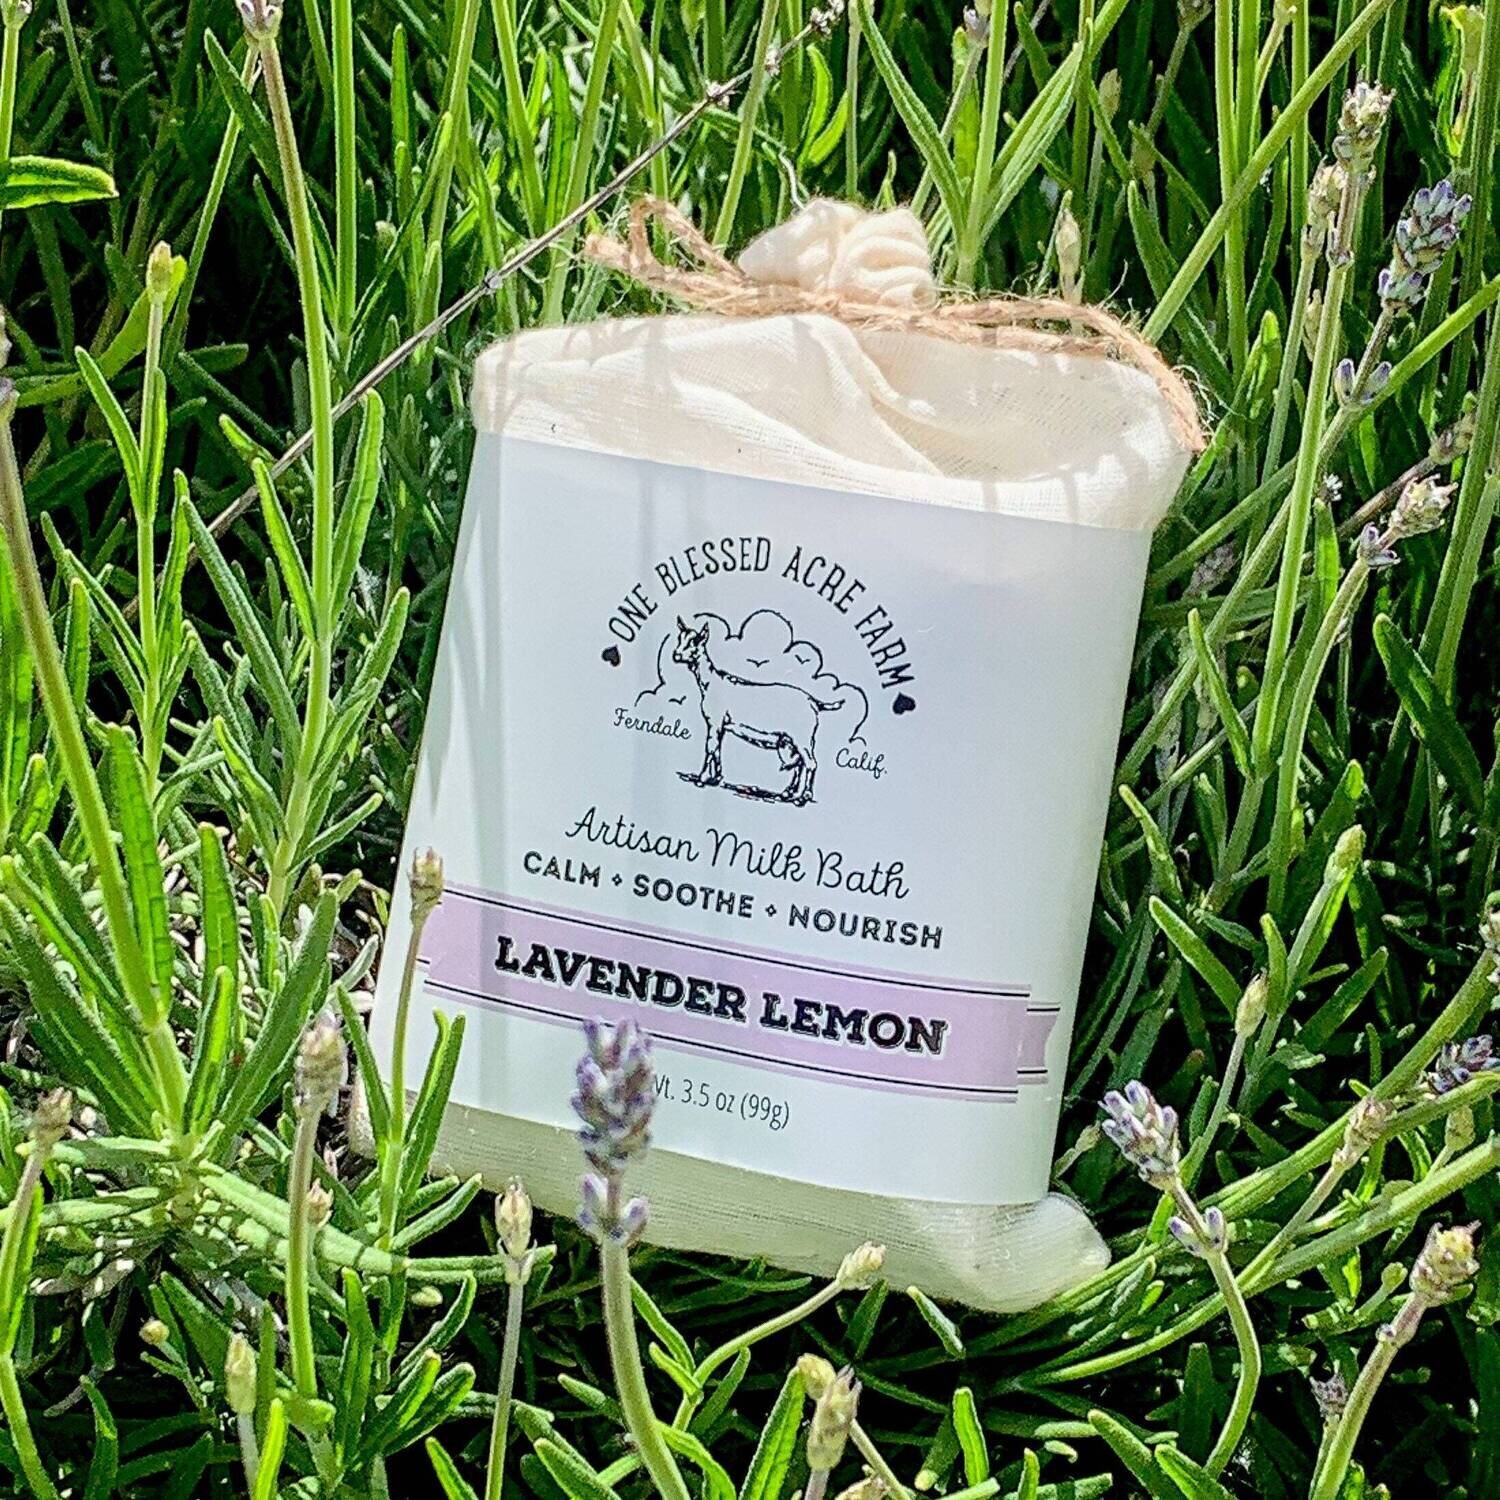 Lavender Lemon Artisan Milk Bath, Goat Milk Tub Tea